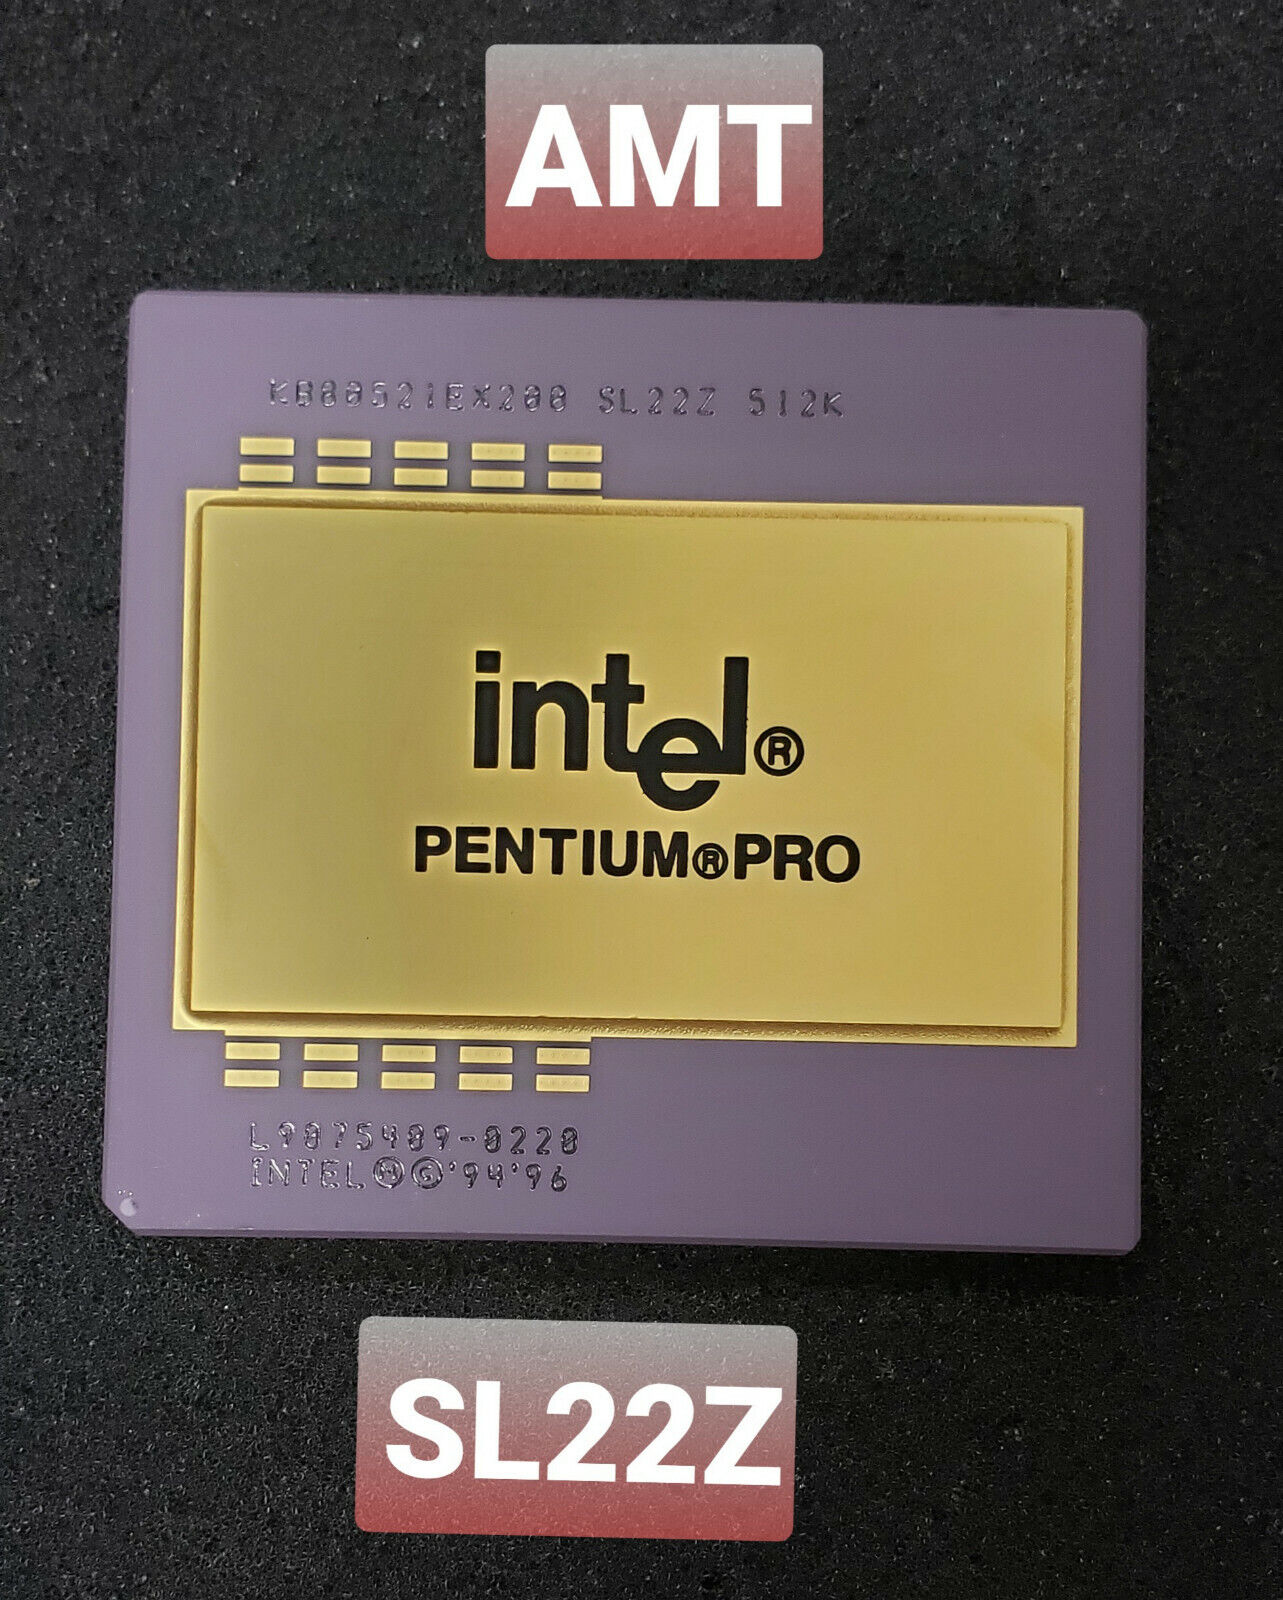 SL22Z Intel Pentium Pro 200 MHz 512K KB80521EX200 Socket 8 Pent Rare Vintage 